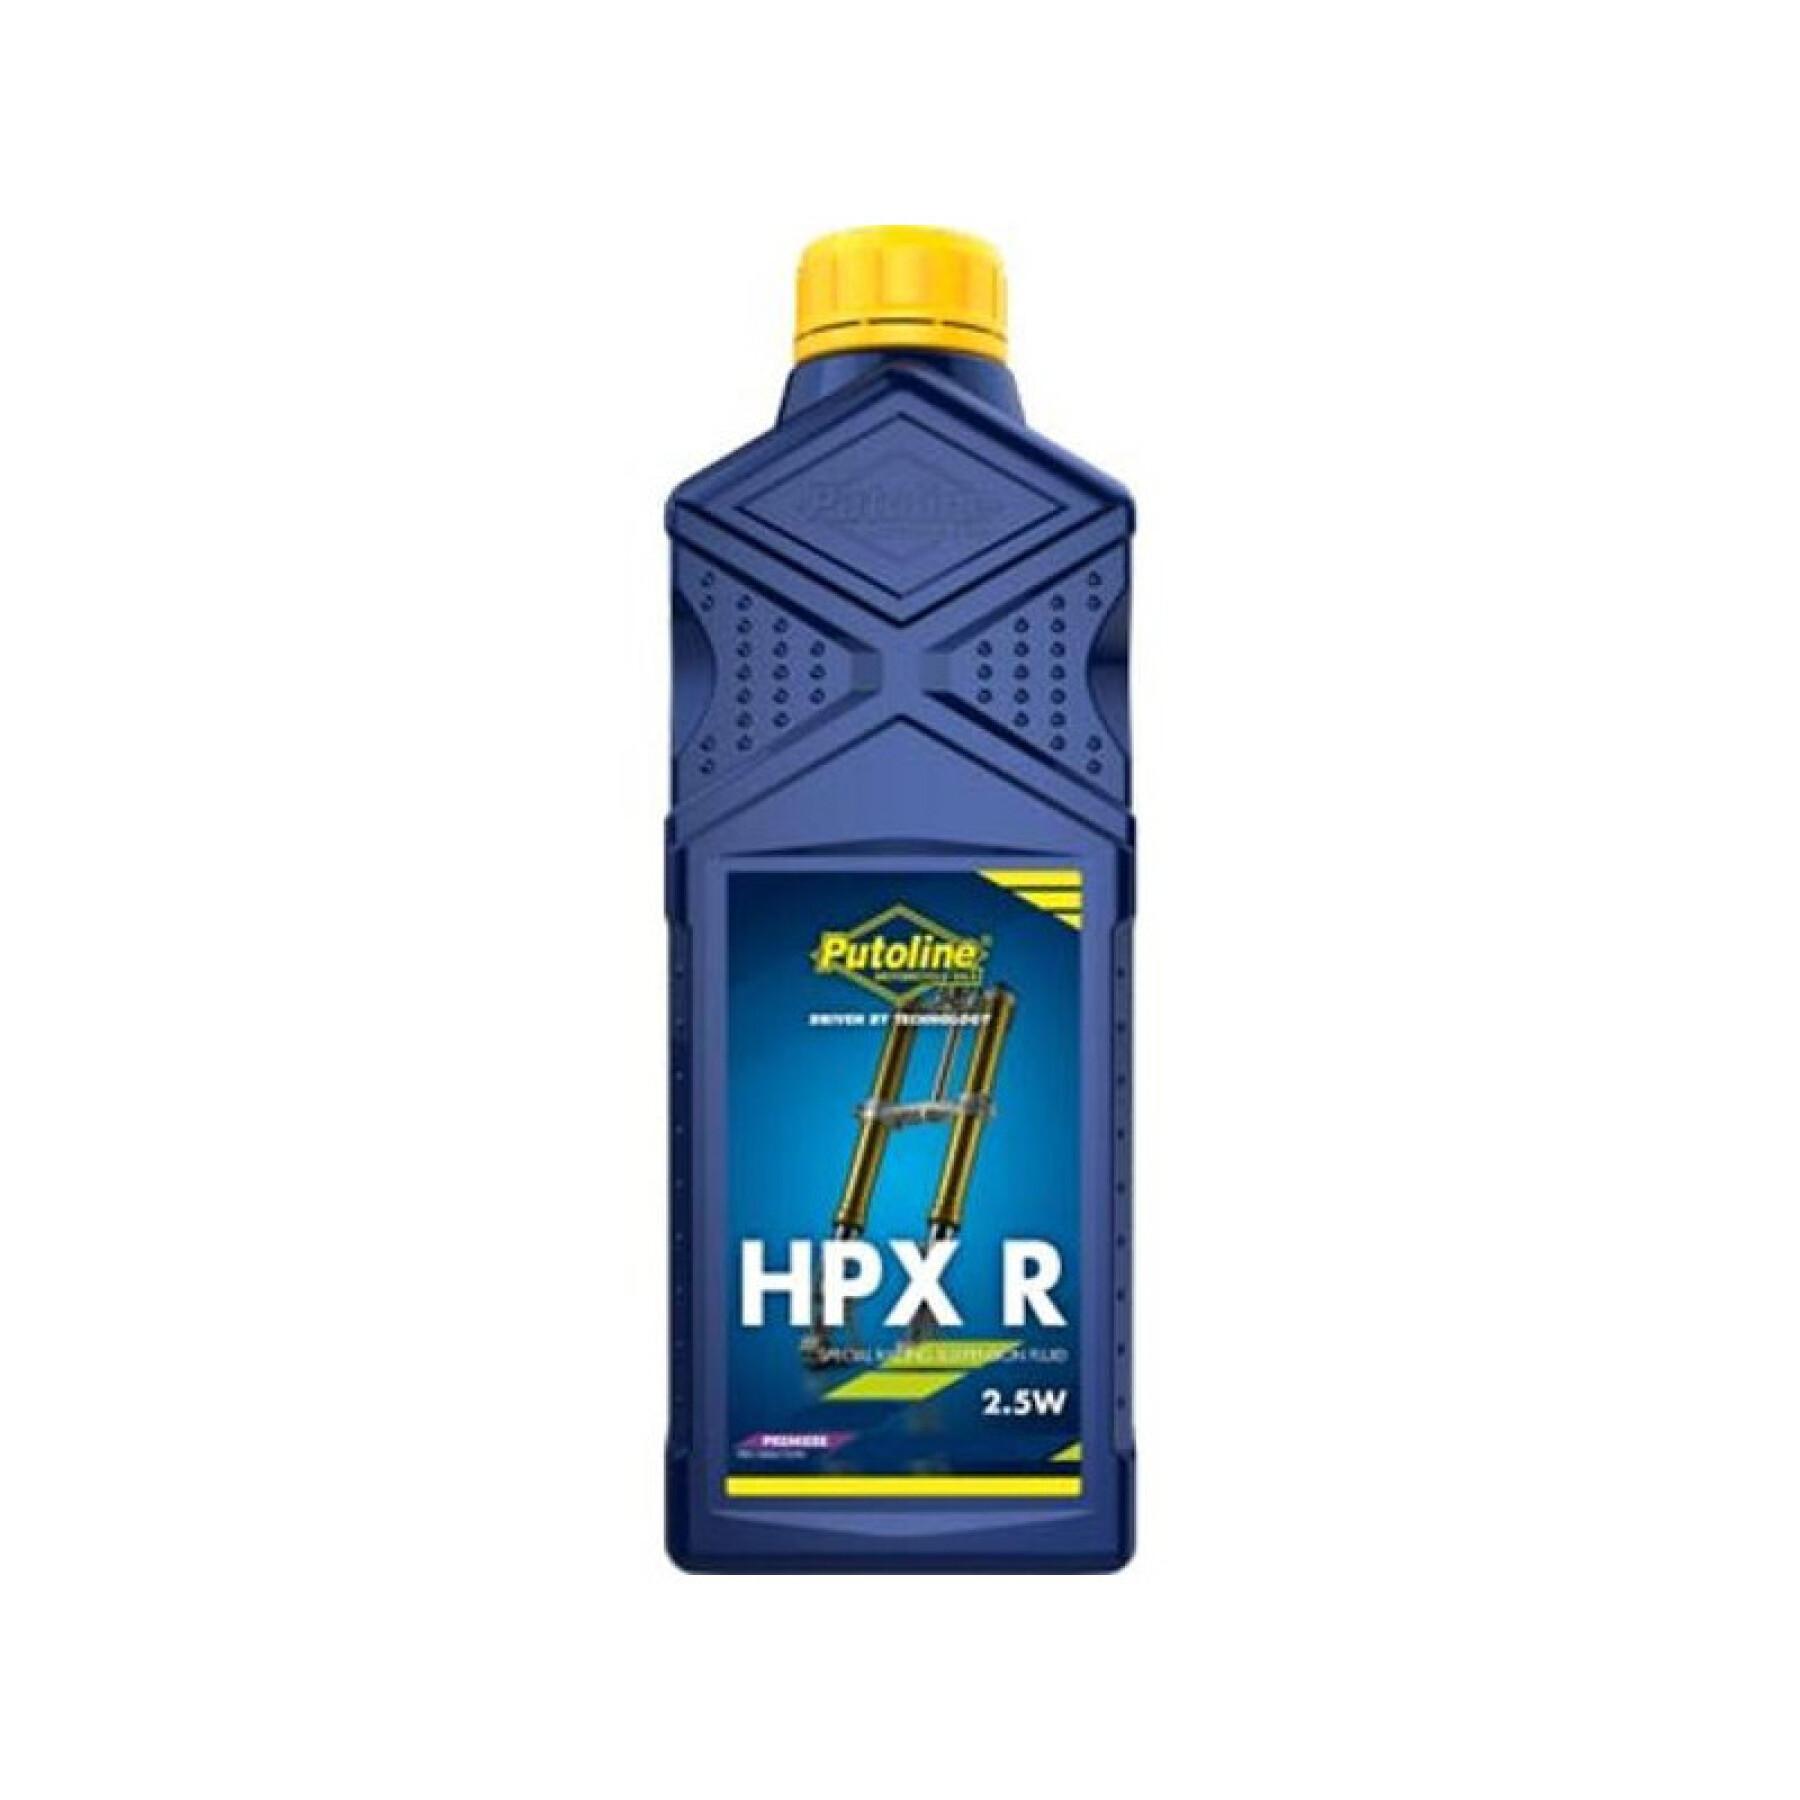 Motorcycle fork oil Putoline HPX 2.5W